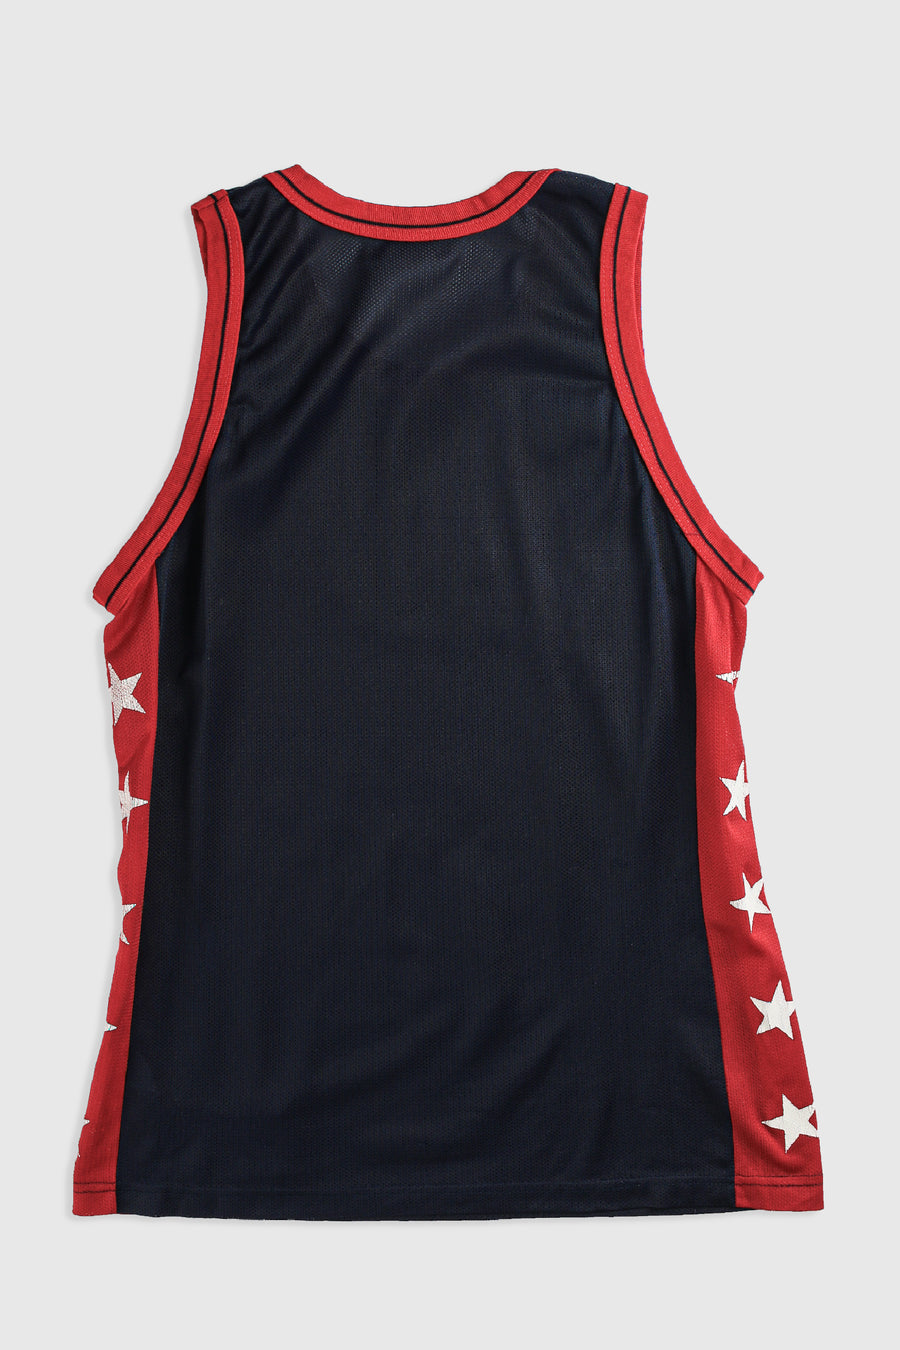 Vintage USA Basketball Jersey - M